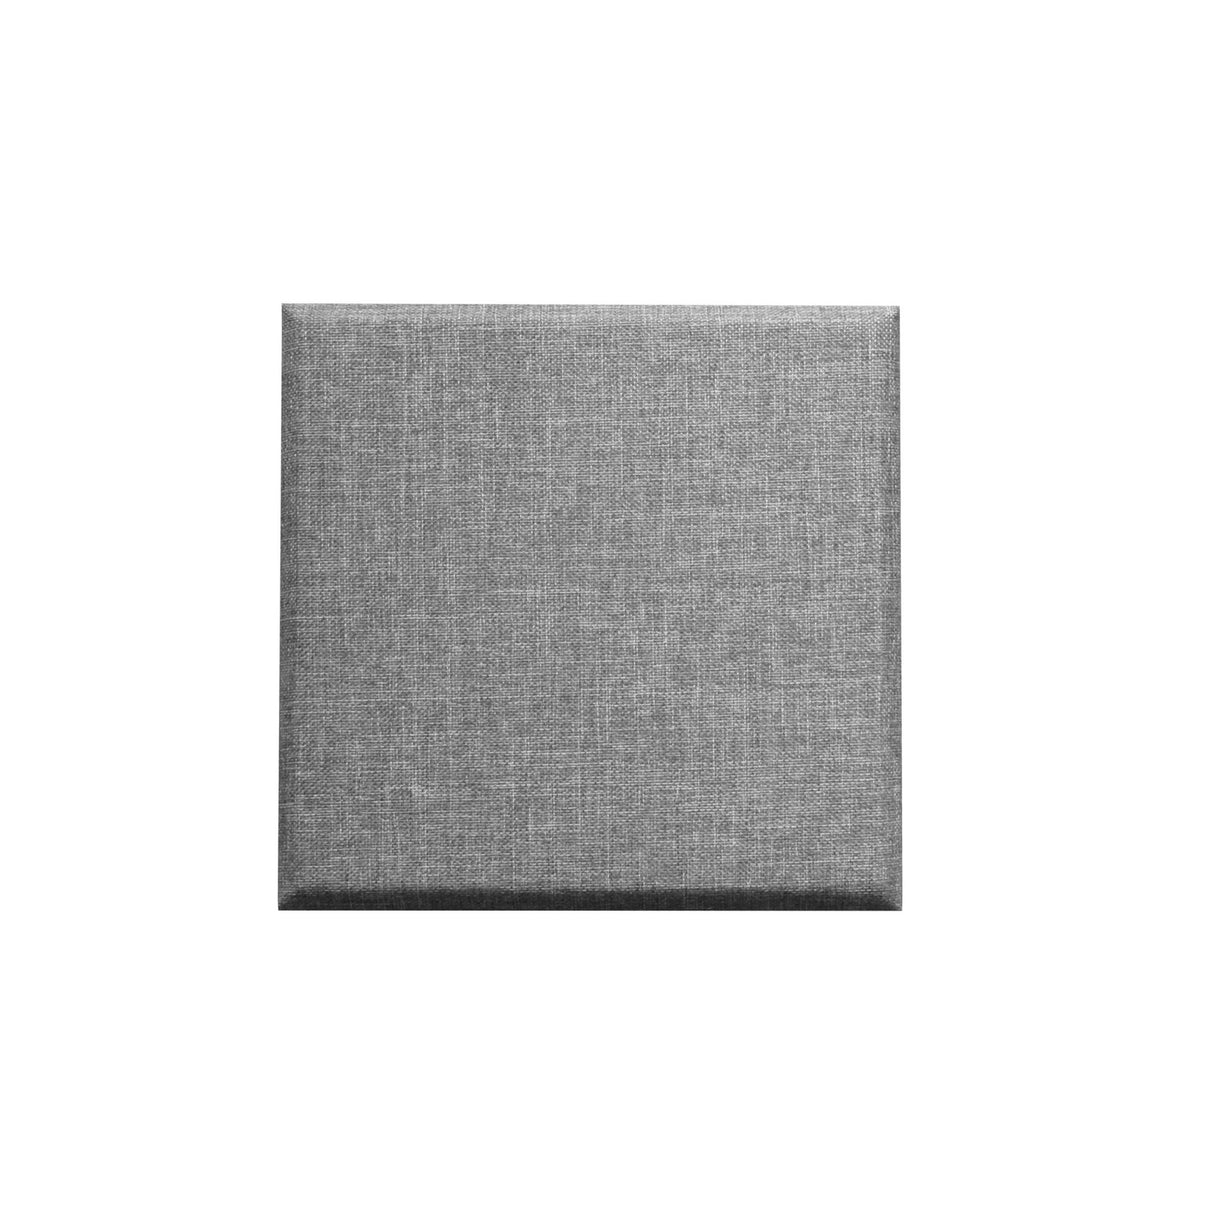 Primacoustic Control Cube 24 x 24 x 2-Inch Acoustic Panels, Grey 12-Set, Beveled Edge